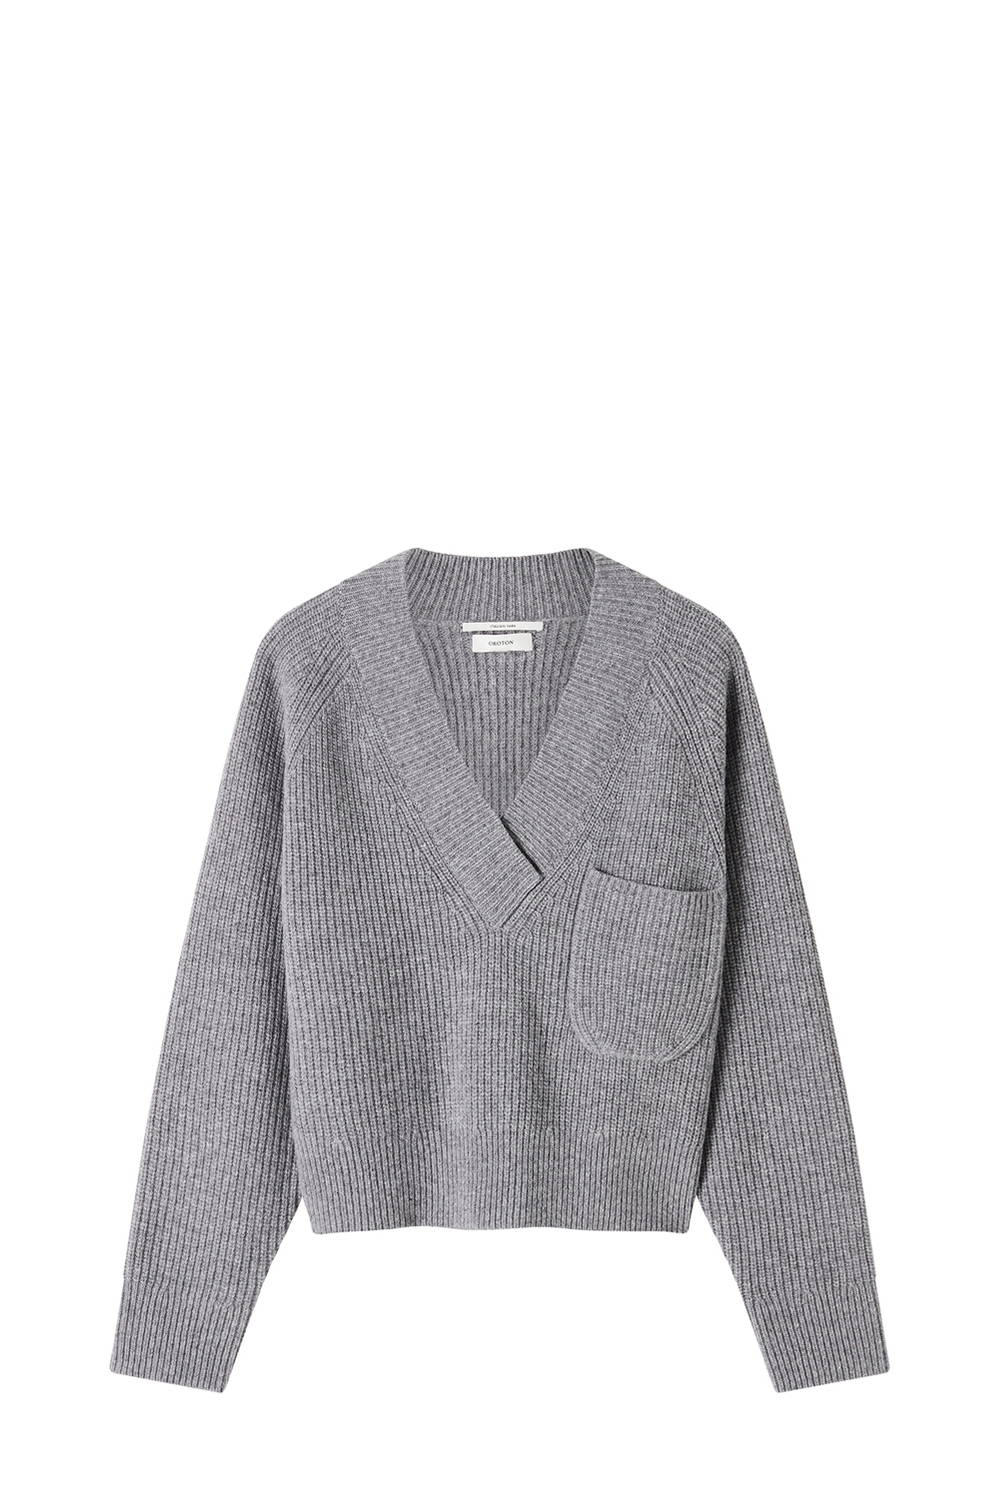 Oroton Grey Wool V Neck Knit Sweater